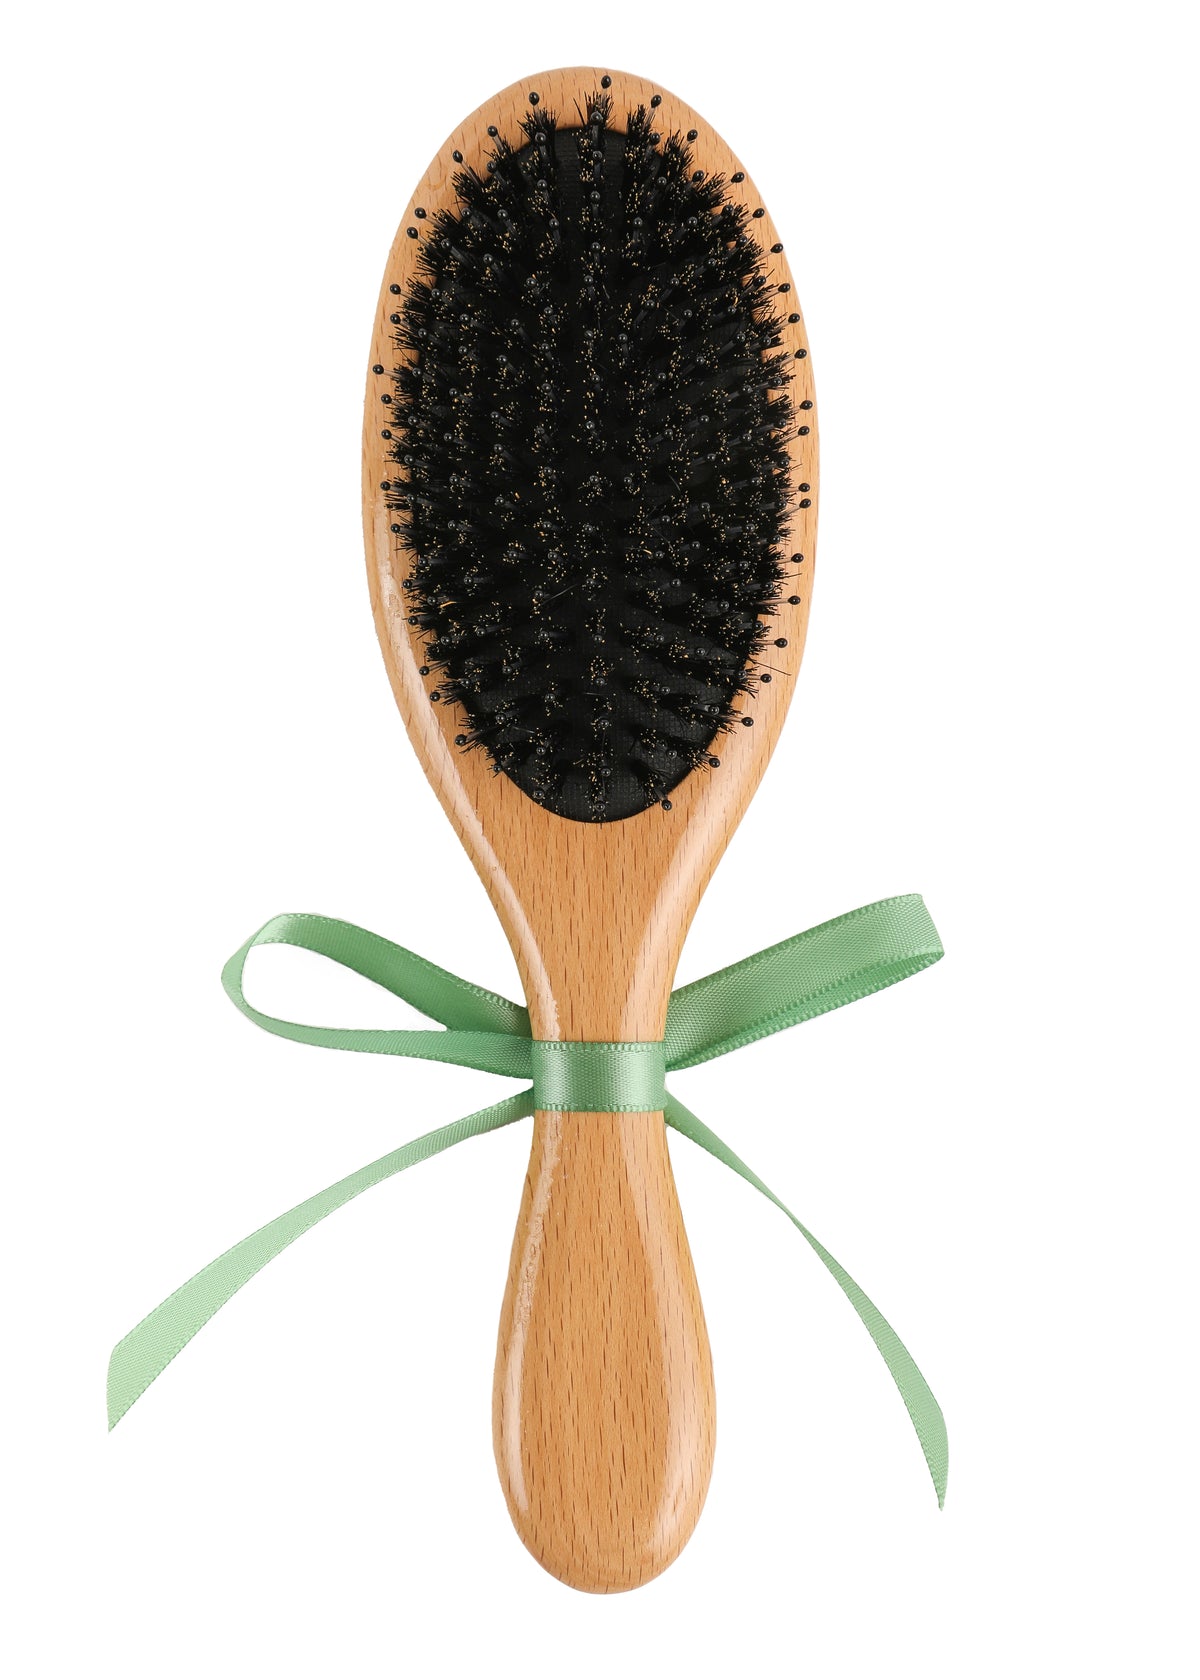 Hairbrush in Green Vase